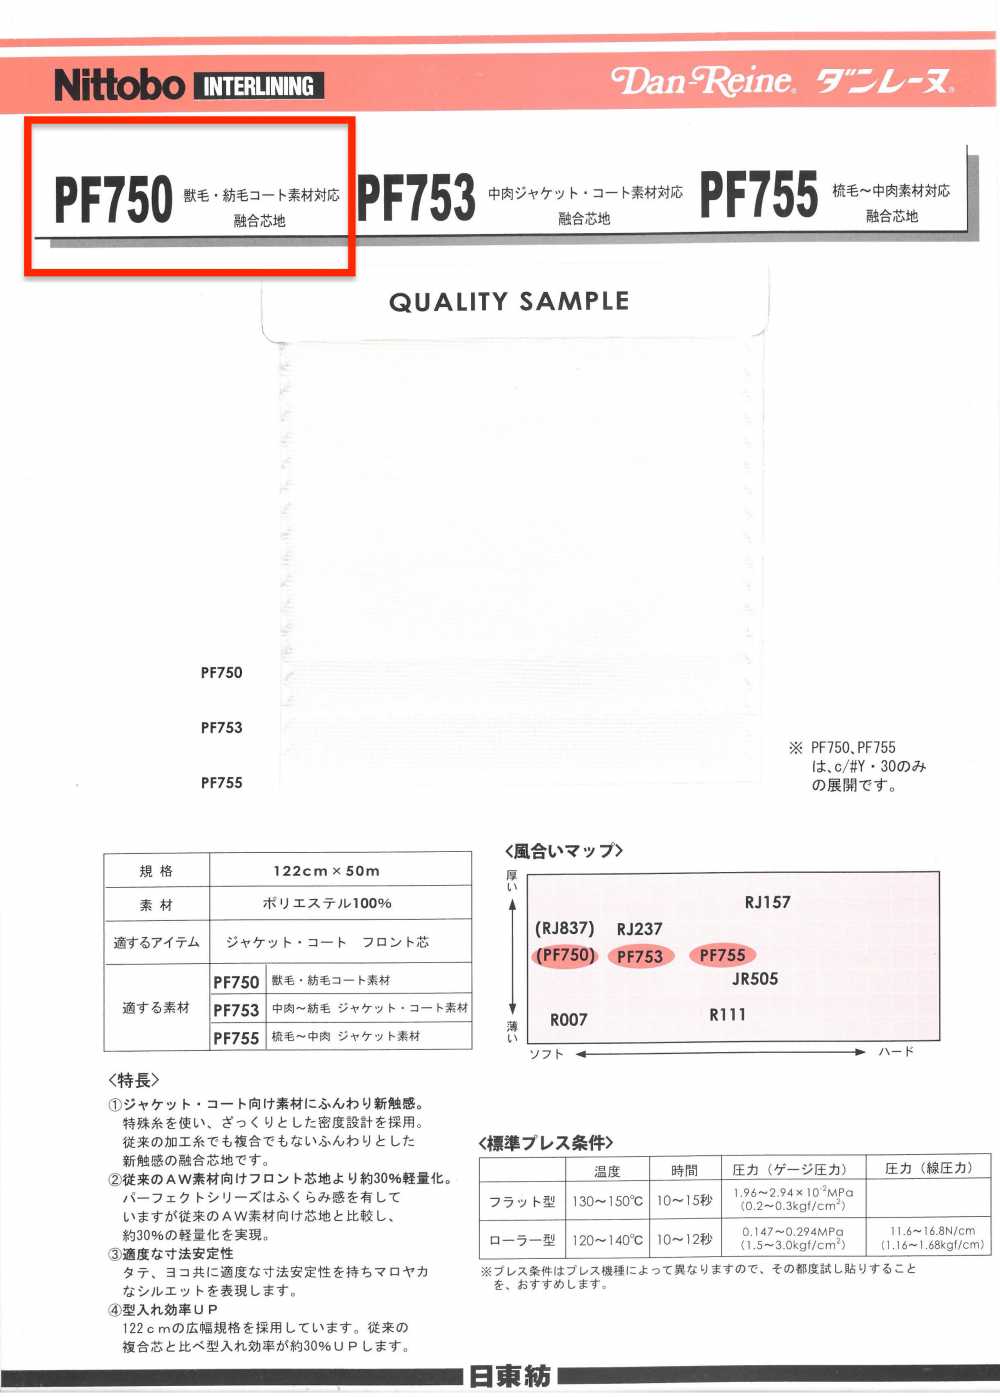 PF750/753/755SAMPLE Sample Card